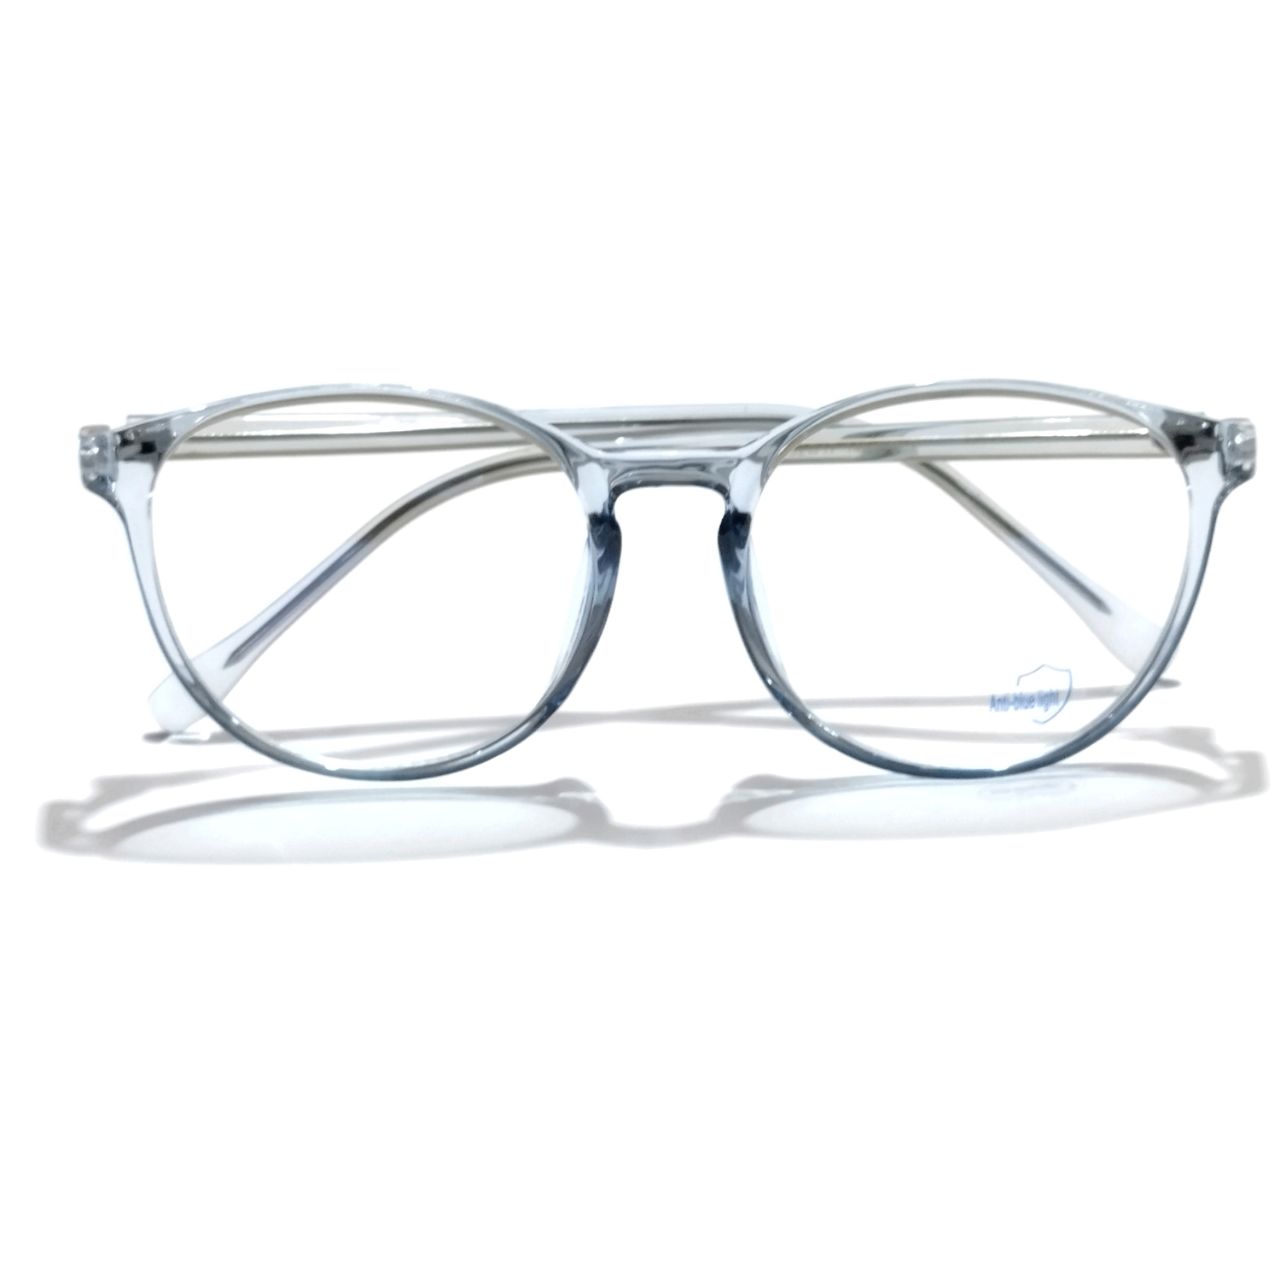 Transparent Blue Frame Round Glasses Computer Glasses foar Men and Women M8555 C7